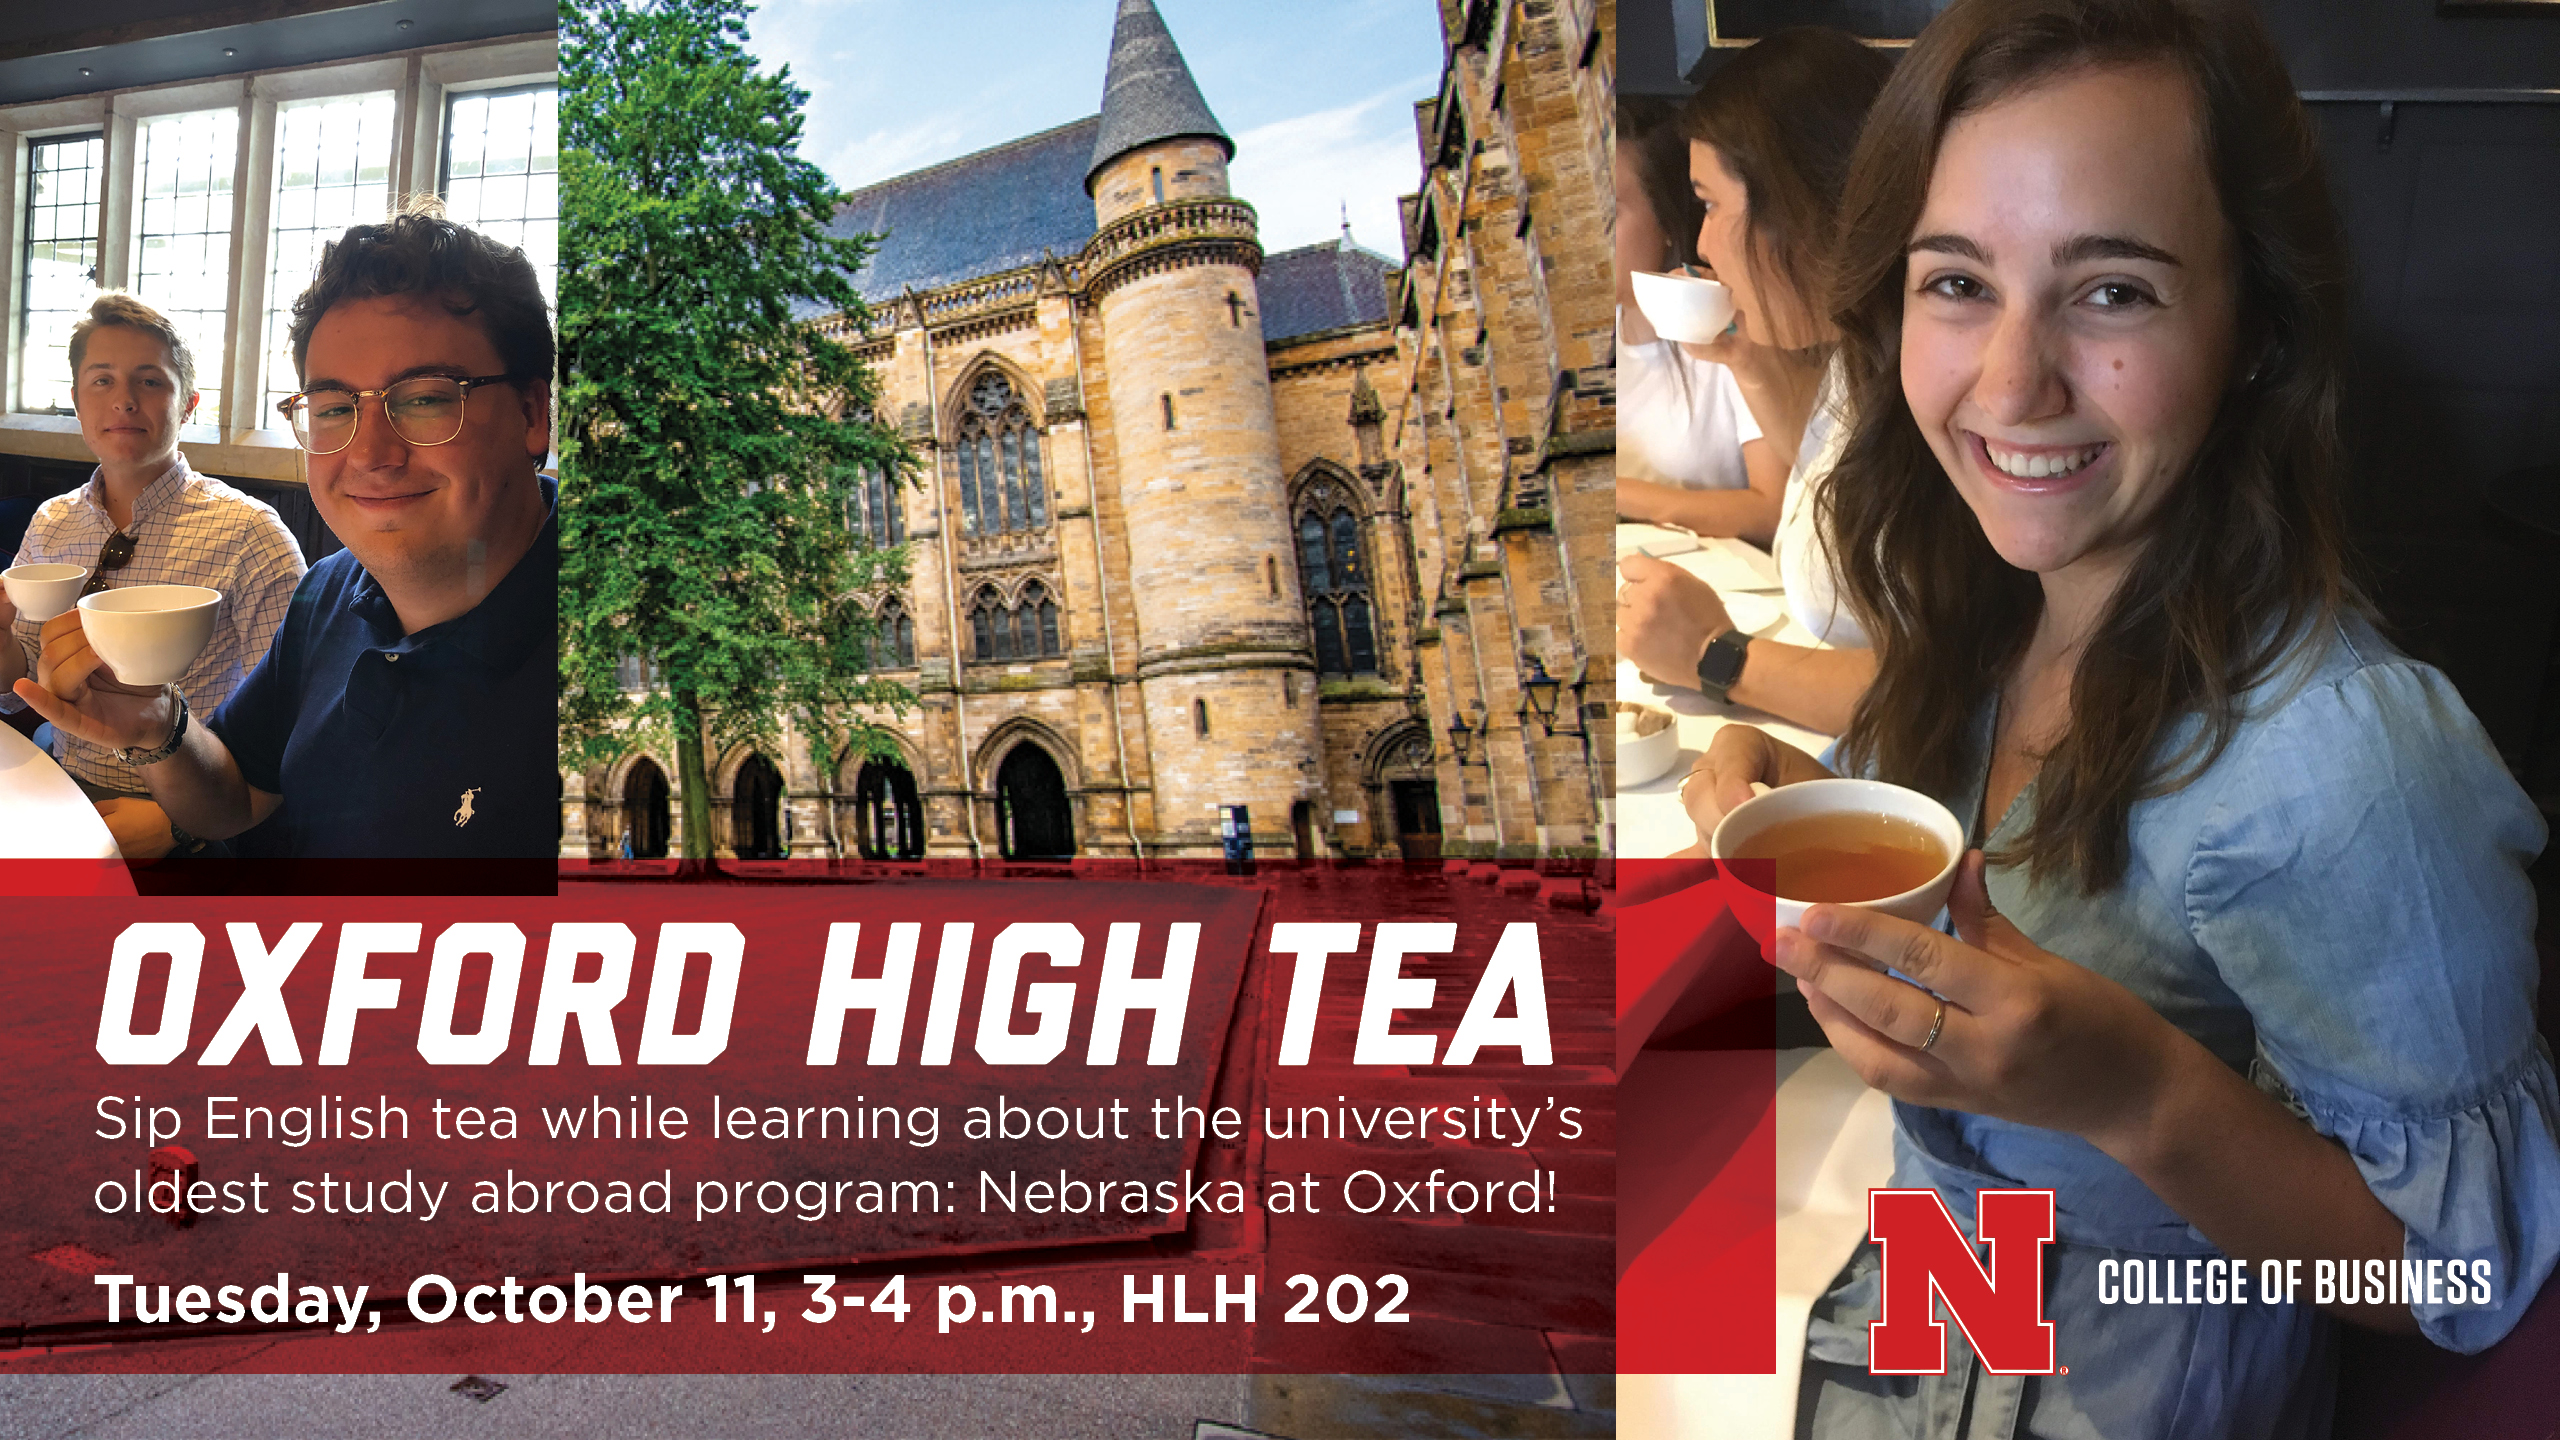 Oxford High Tea | Tuesday, Oct. 11, 3-4 p.m. | HLH 202